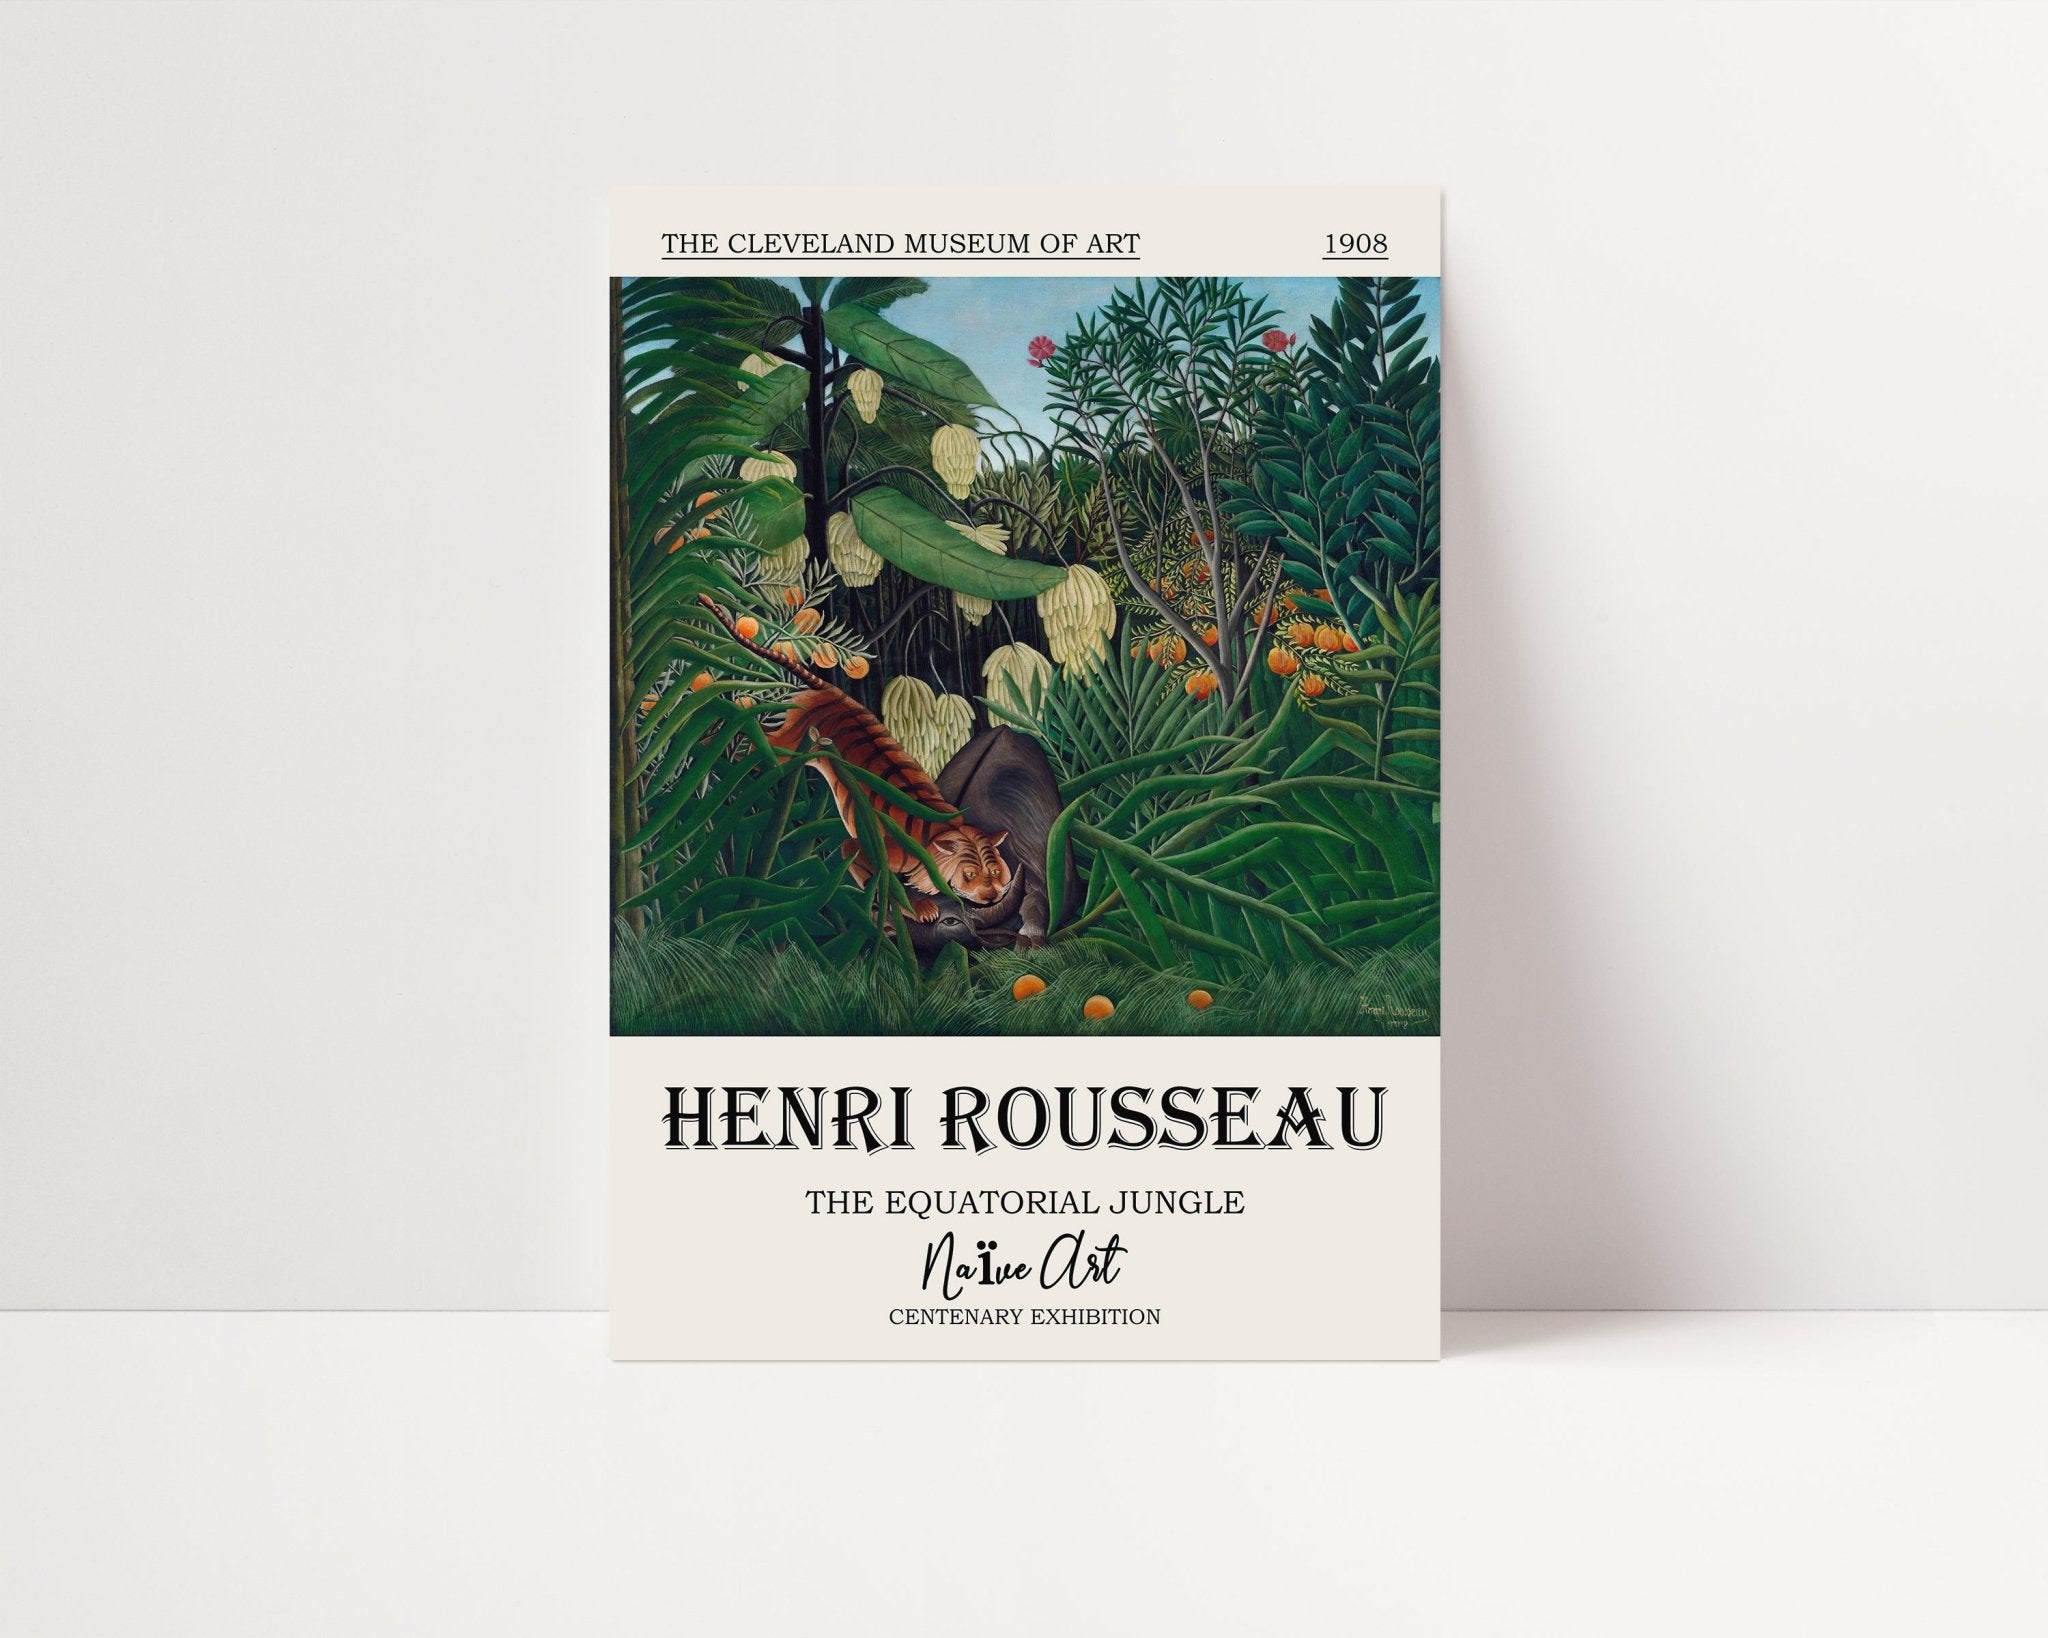 Henri Rousseau Jungle II - D'Luxe Prints